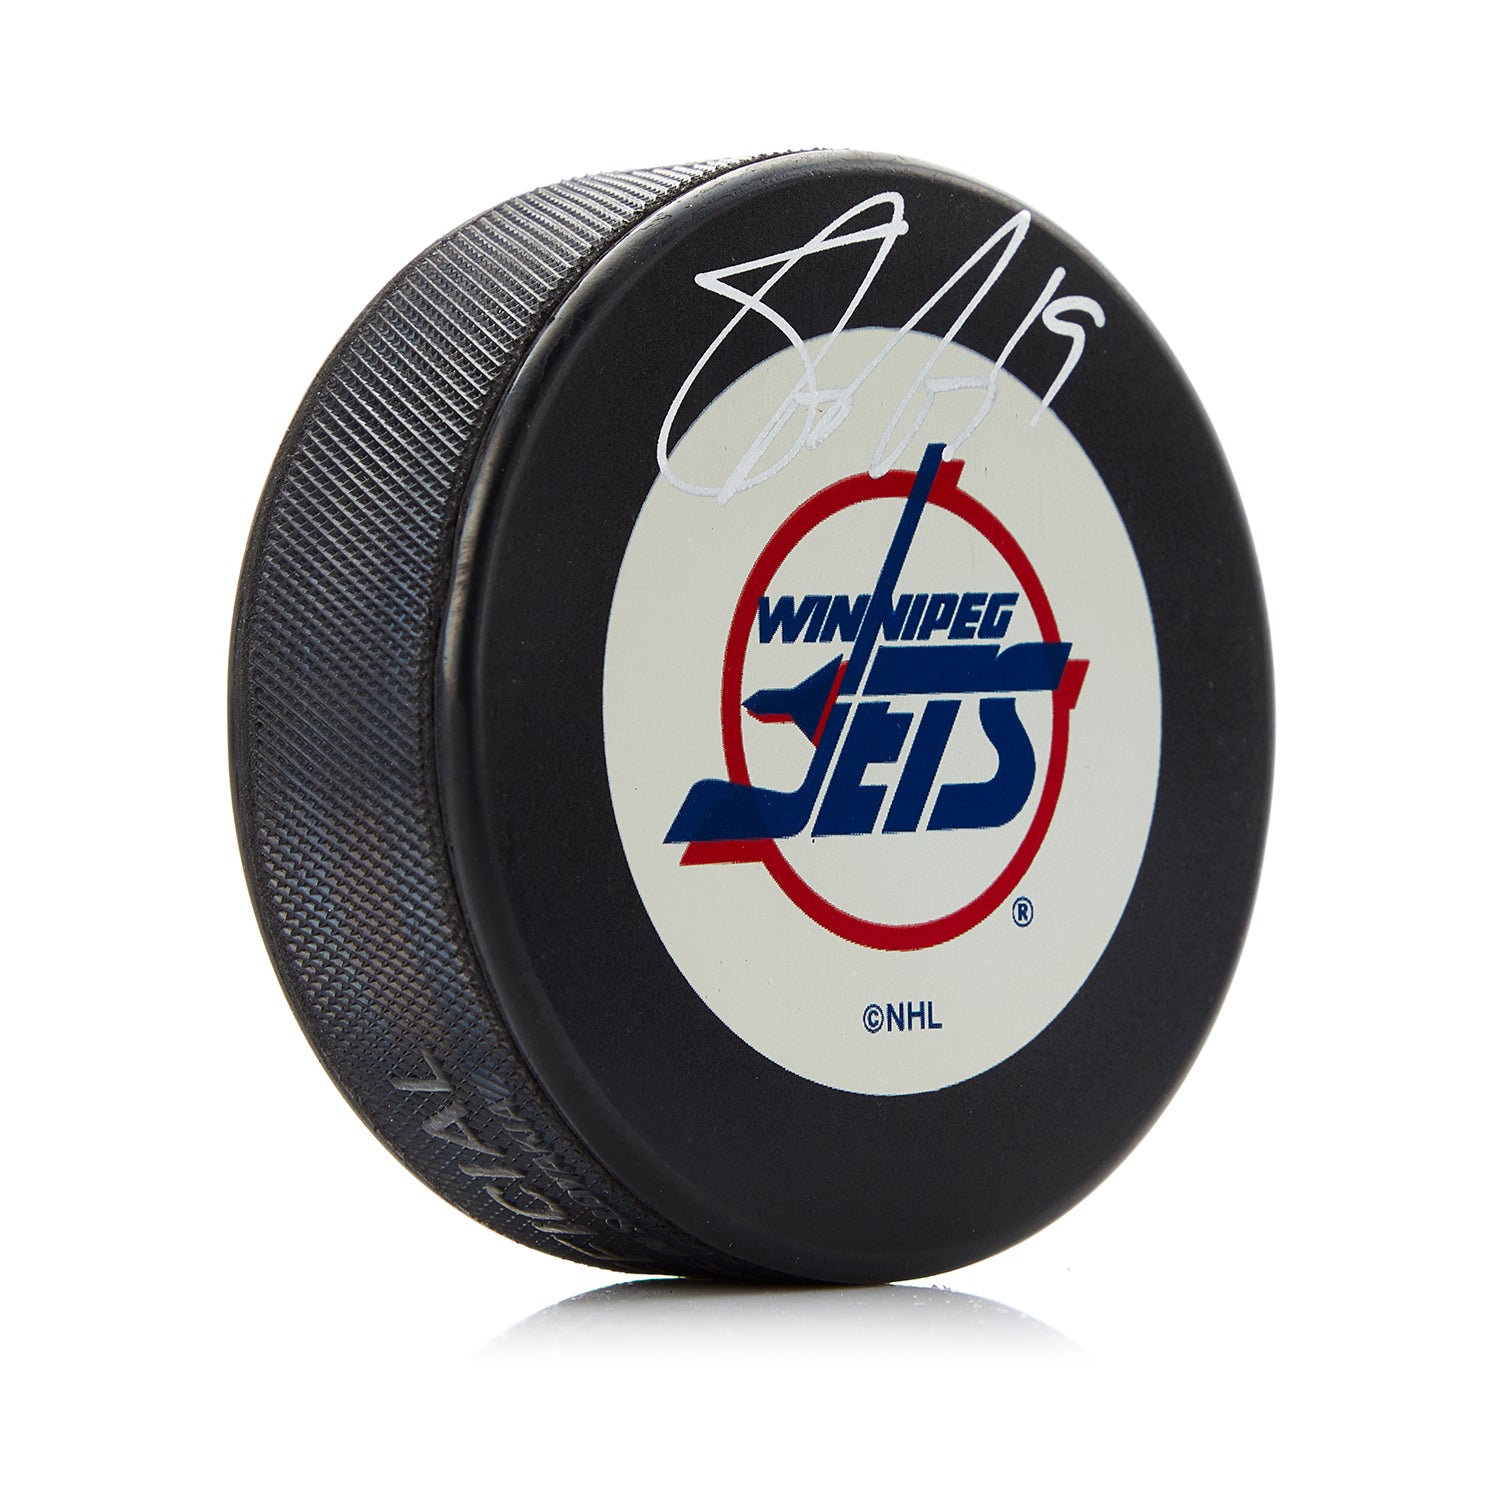 Shane Doan Autographed Winnipeg Jets Hockey Puck